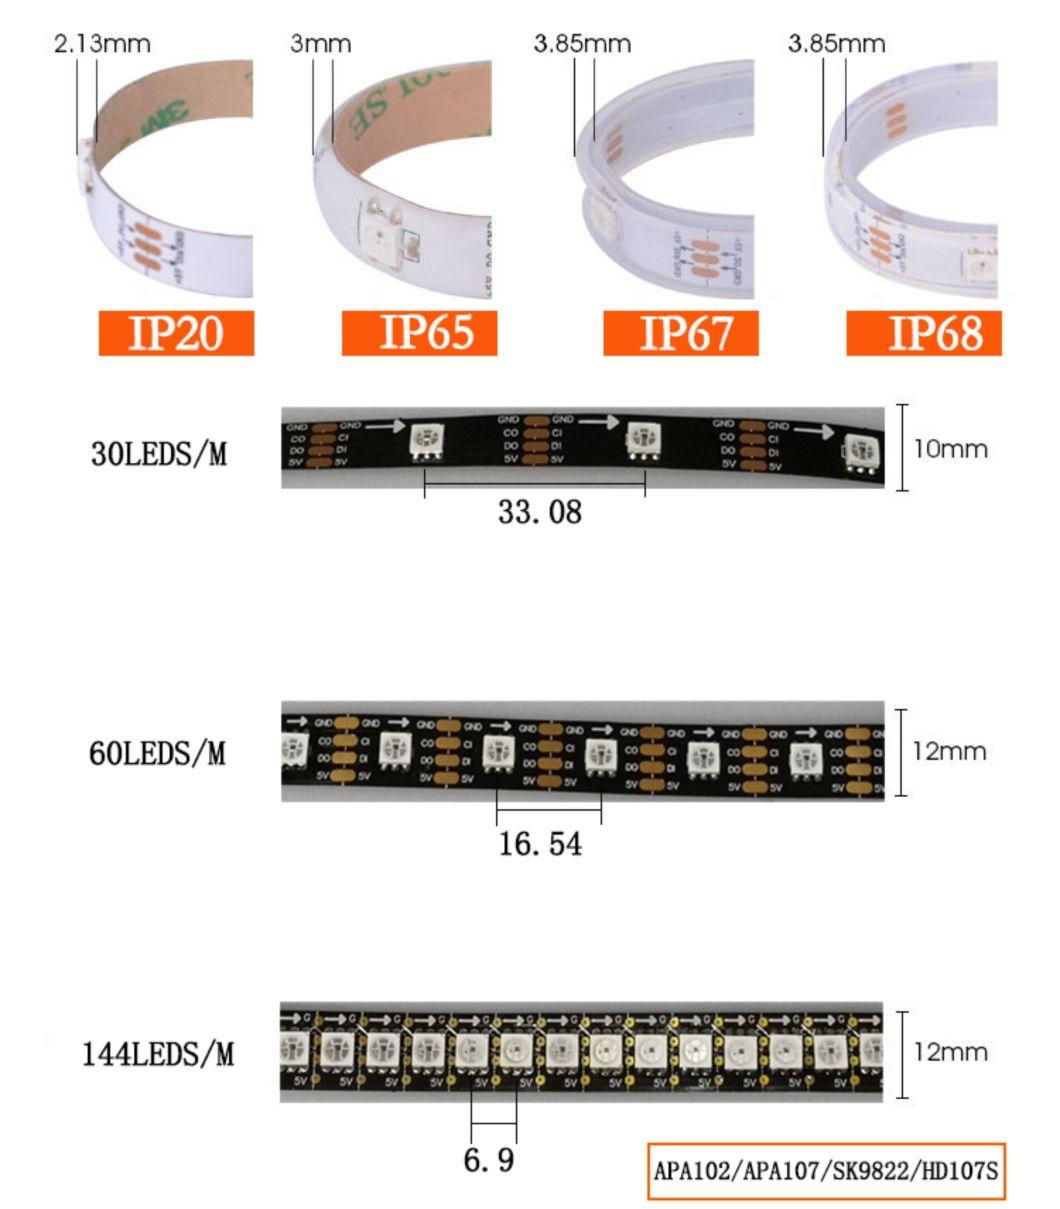 HD107s/Apa107/Apa102/Sk9822 144LEDs/M Flexible Pixels Light LED Strip 144pixels